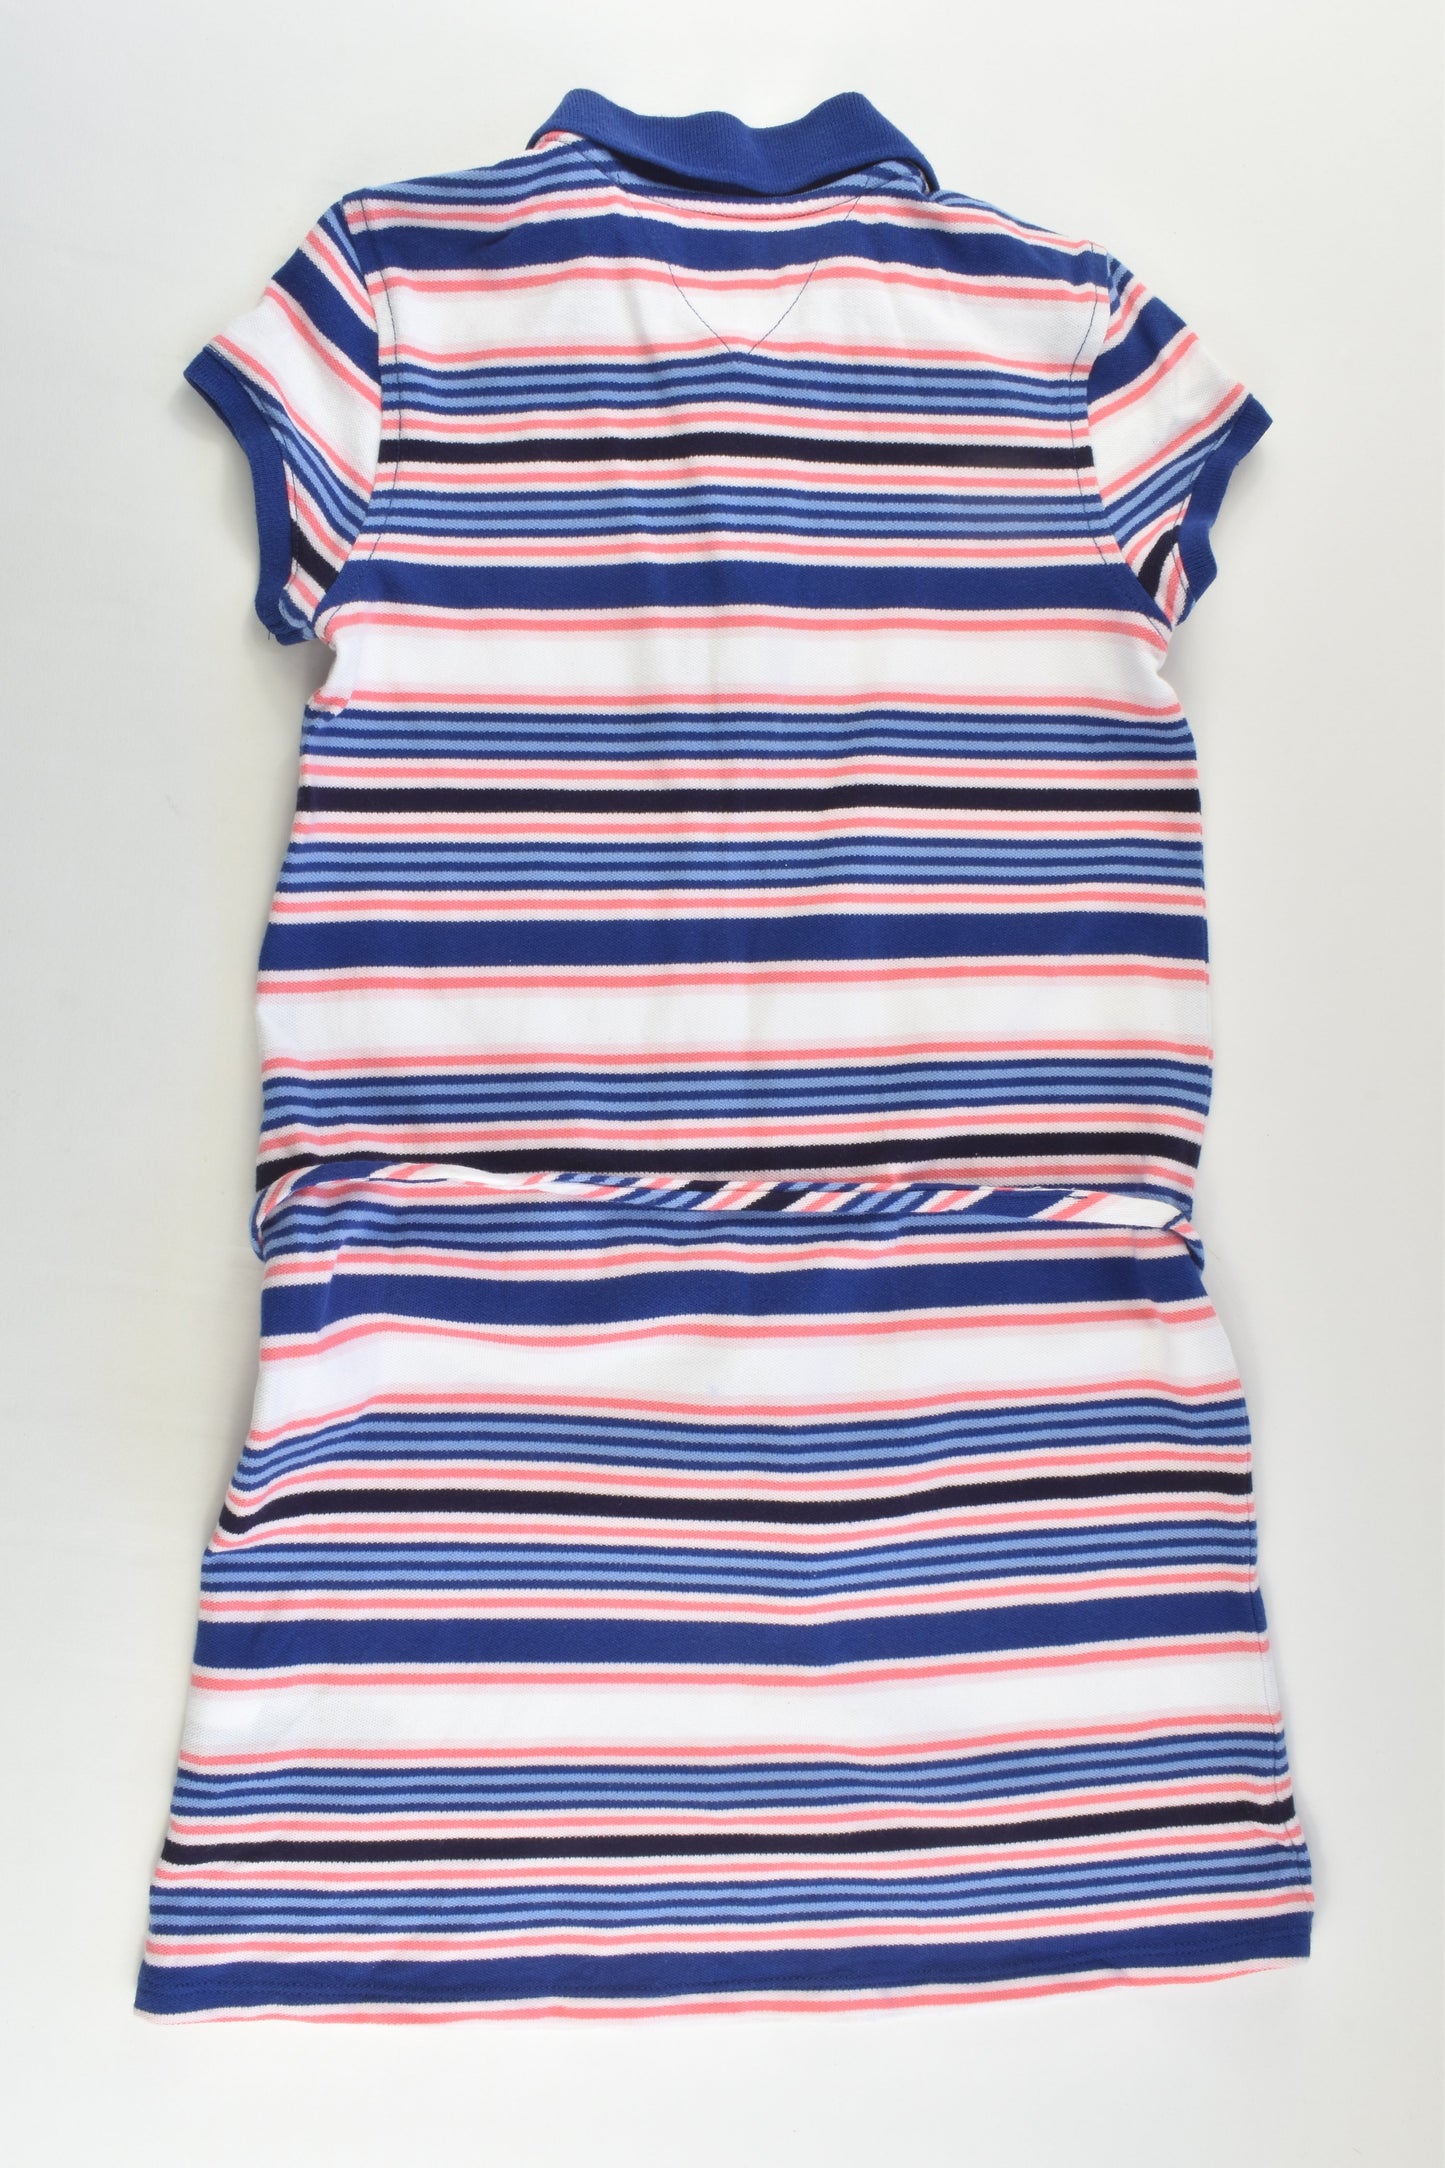 Tommy Hilfiger Size 7 Striped Polo Dress